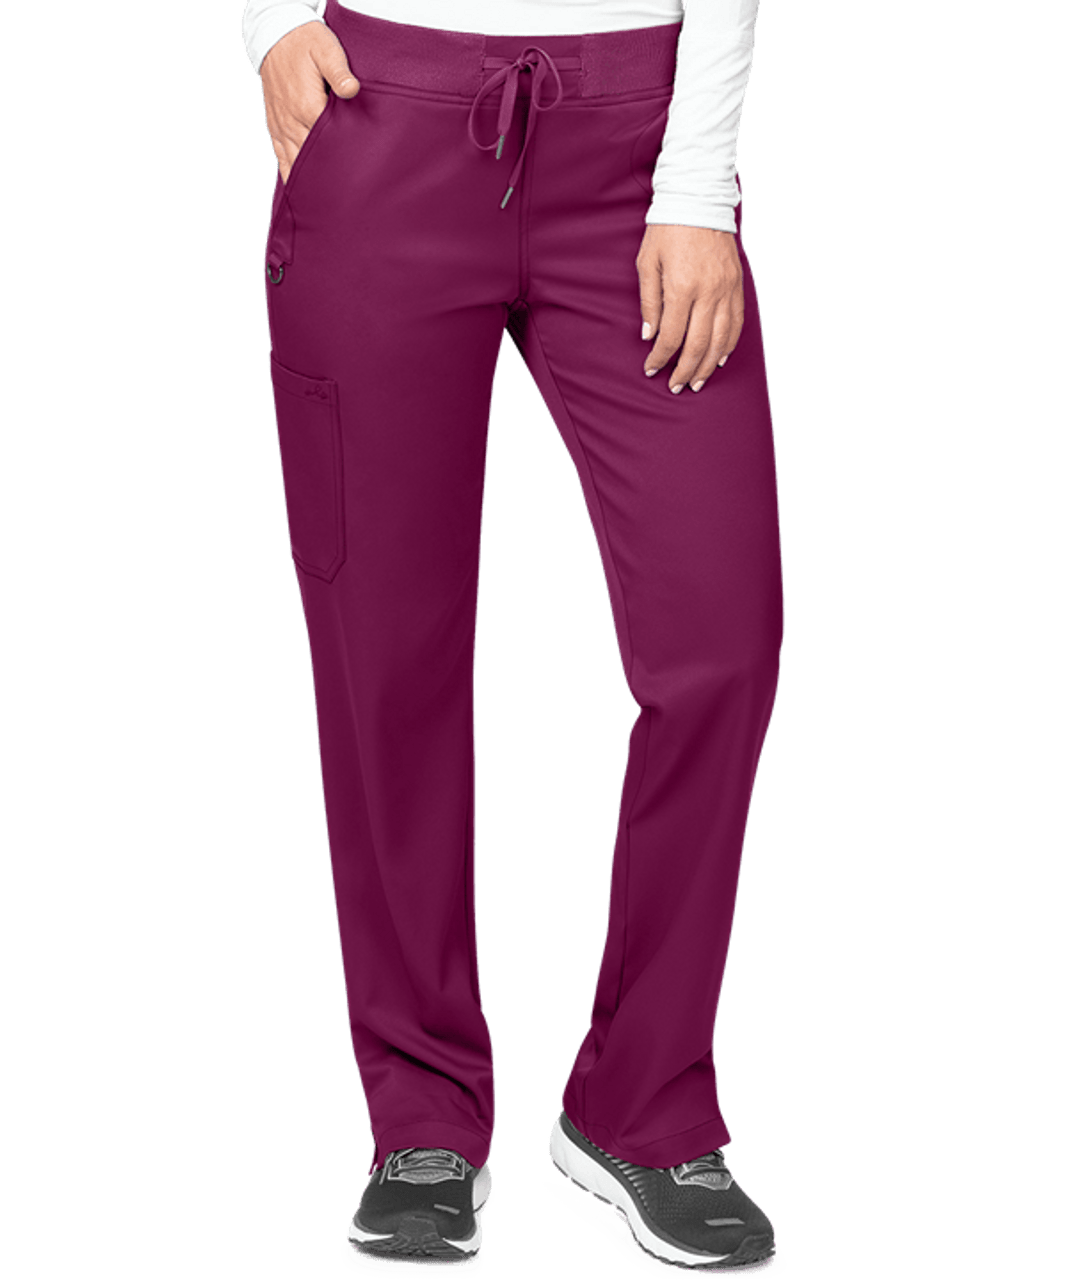 Ava Therese Women's Yoga Scrub Pant style 3018